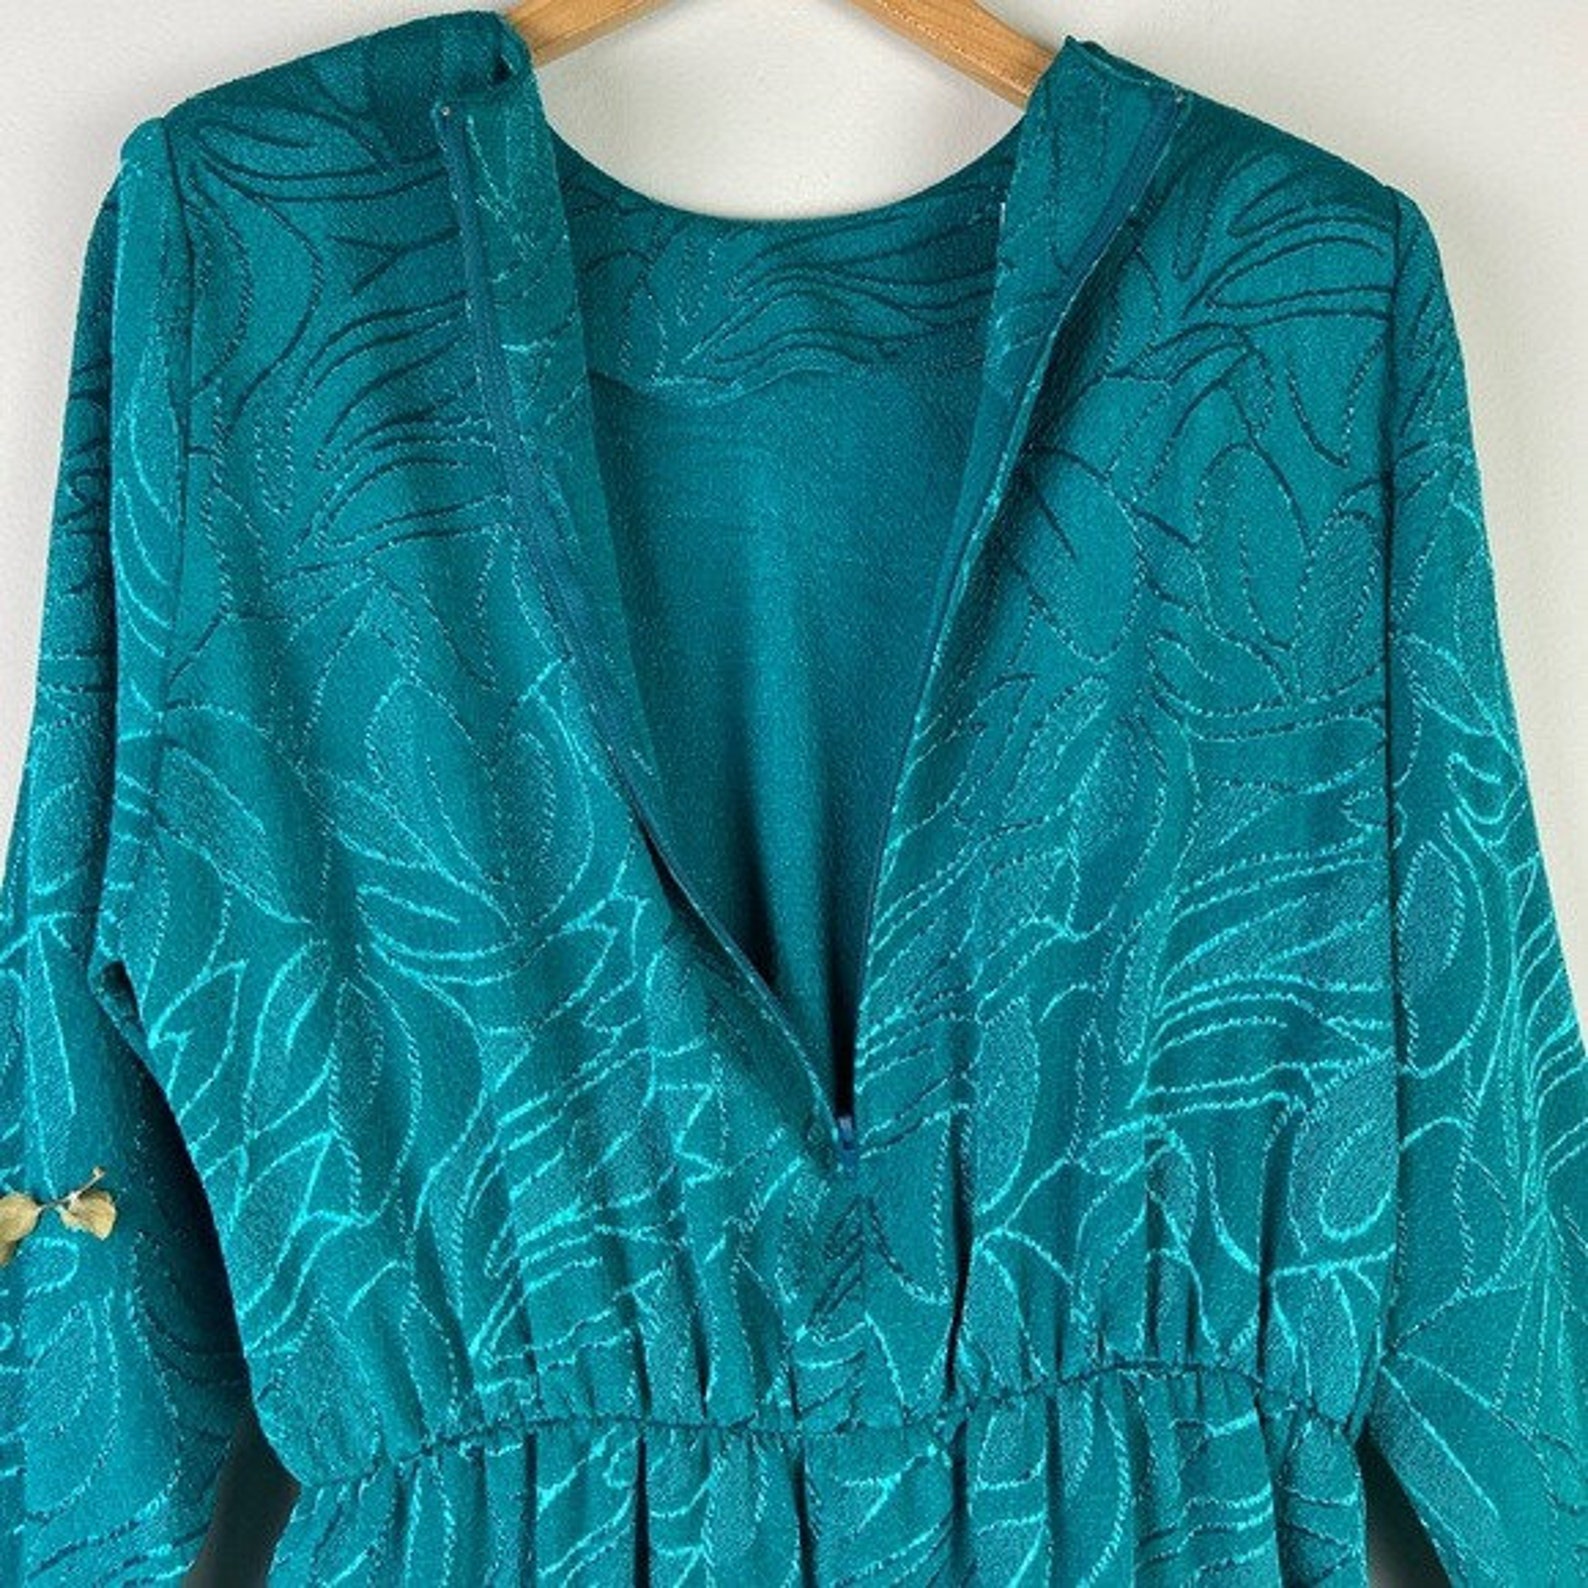 Diane Roberts Vintage 80's Teal Jacquard Party Dress | Etsy